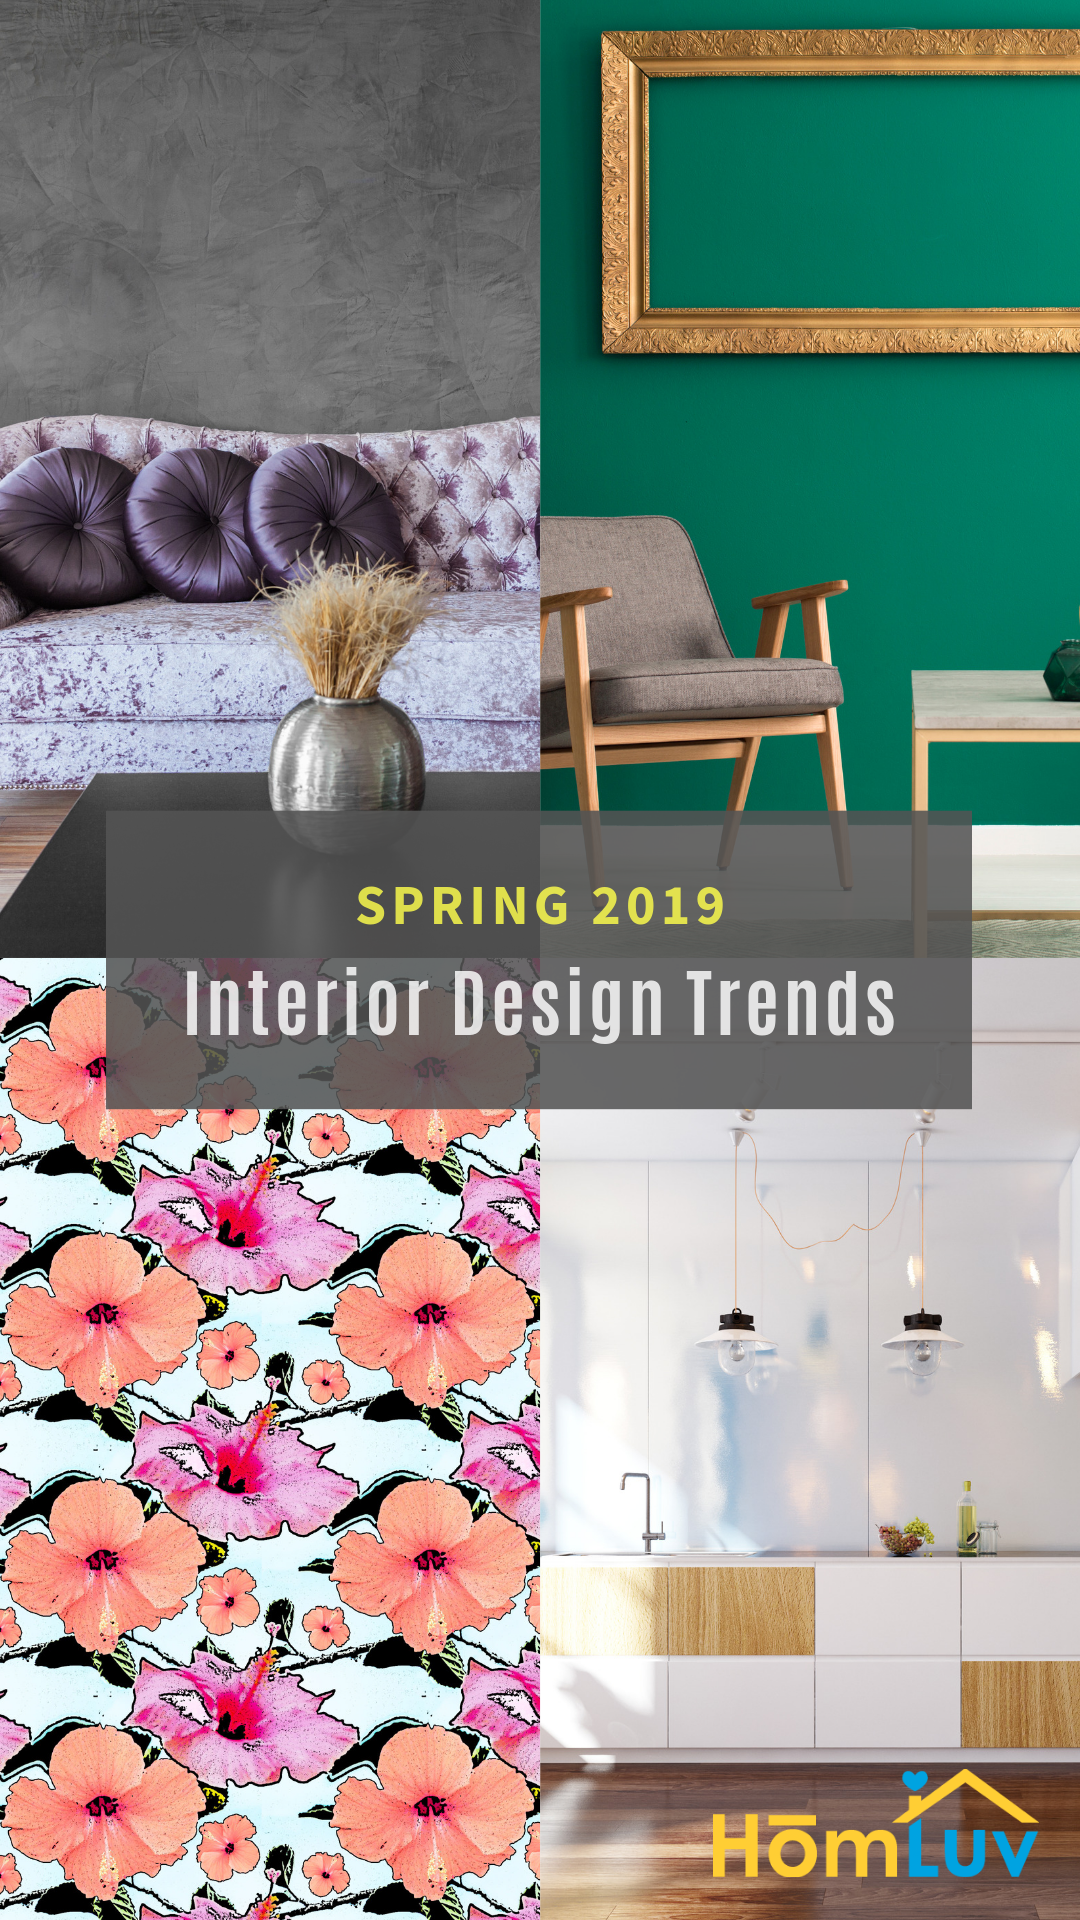 Spring 2019 Interior Design Trends